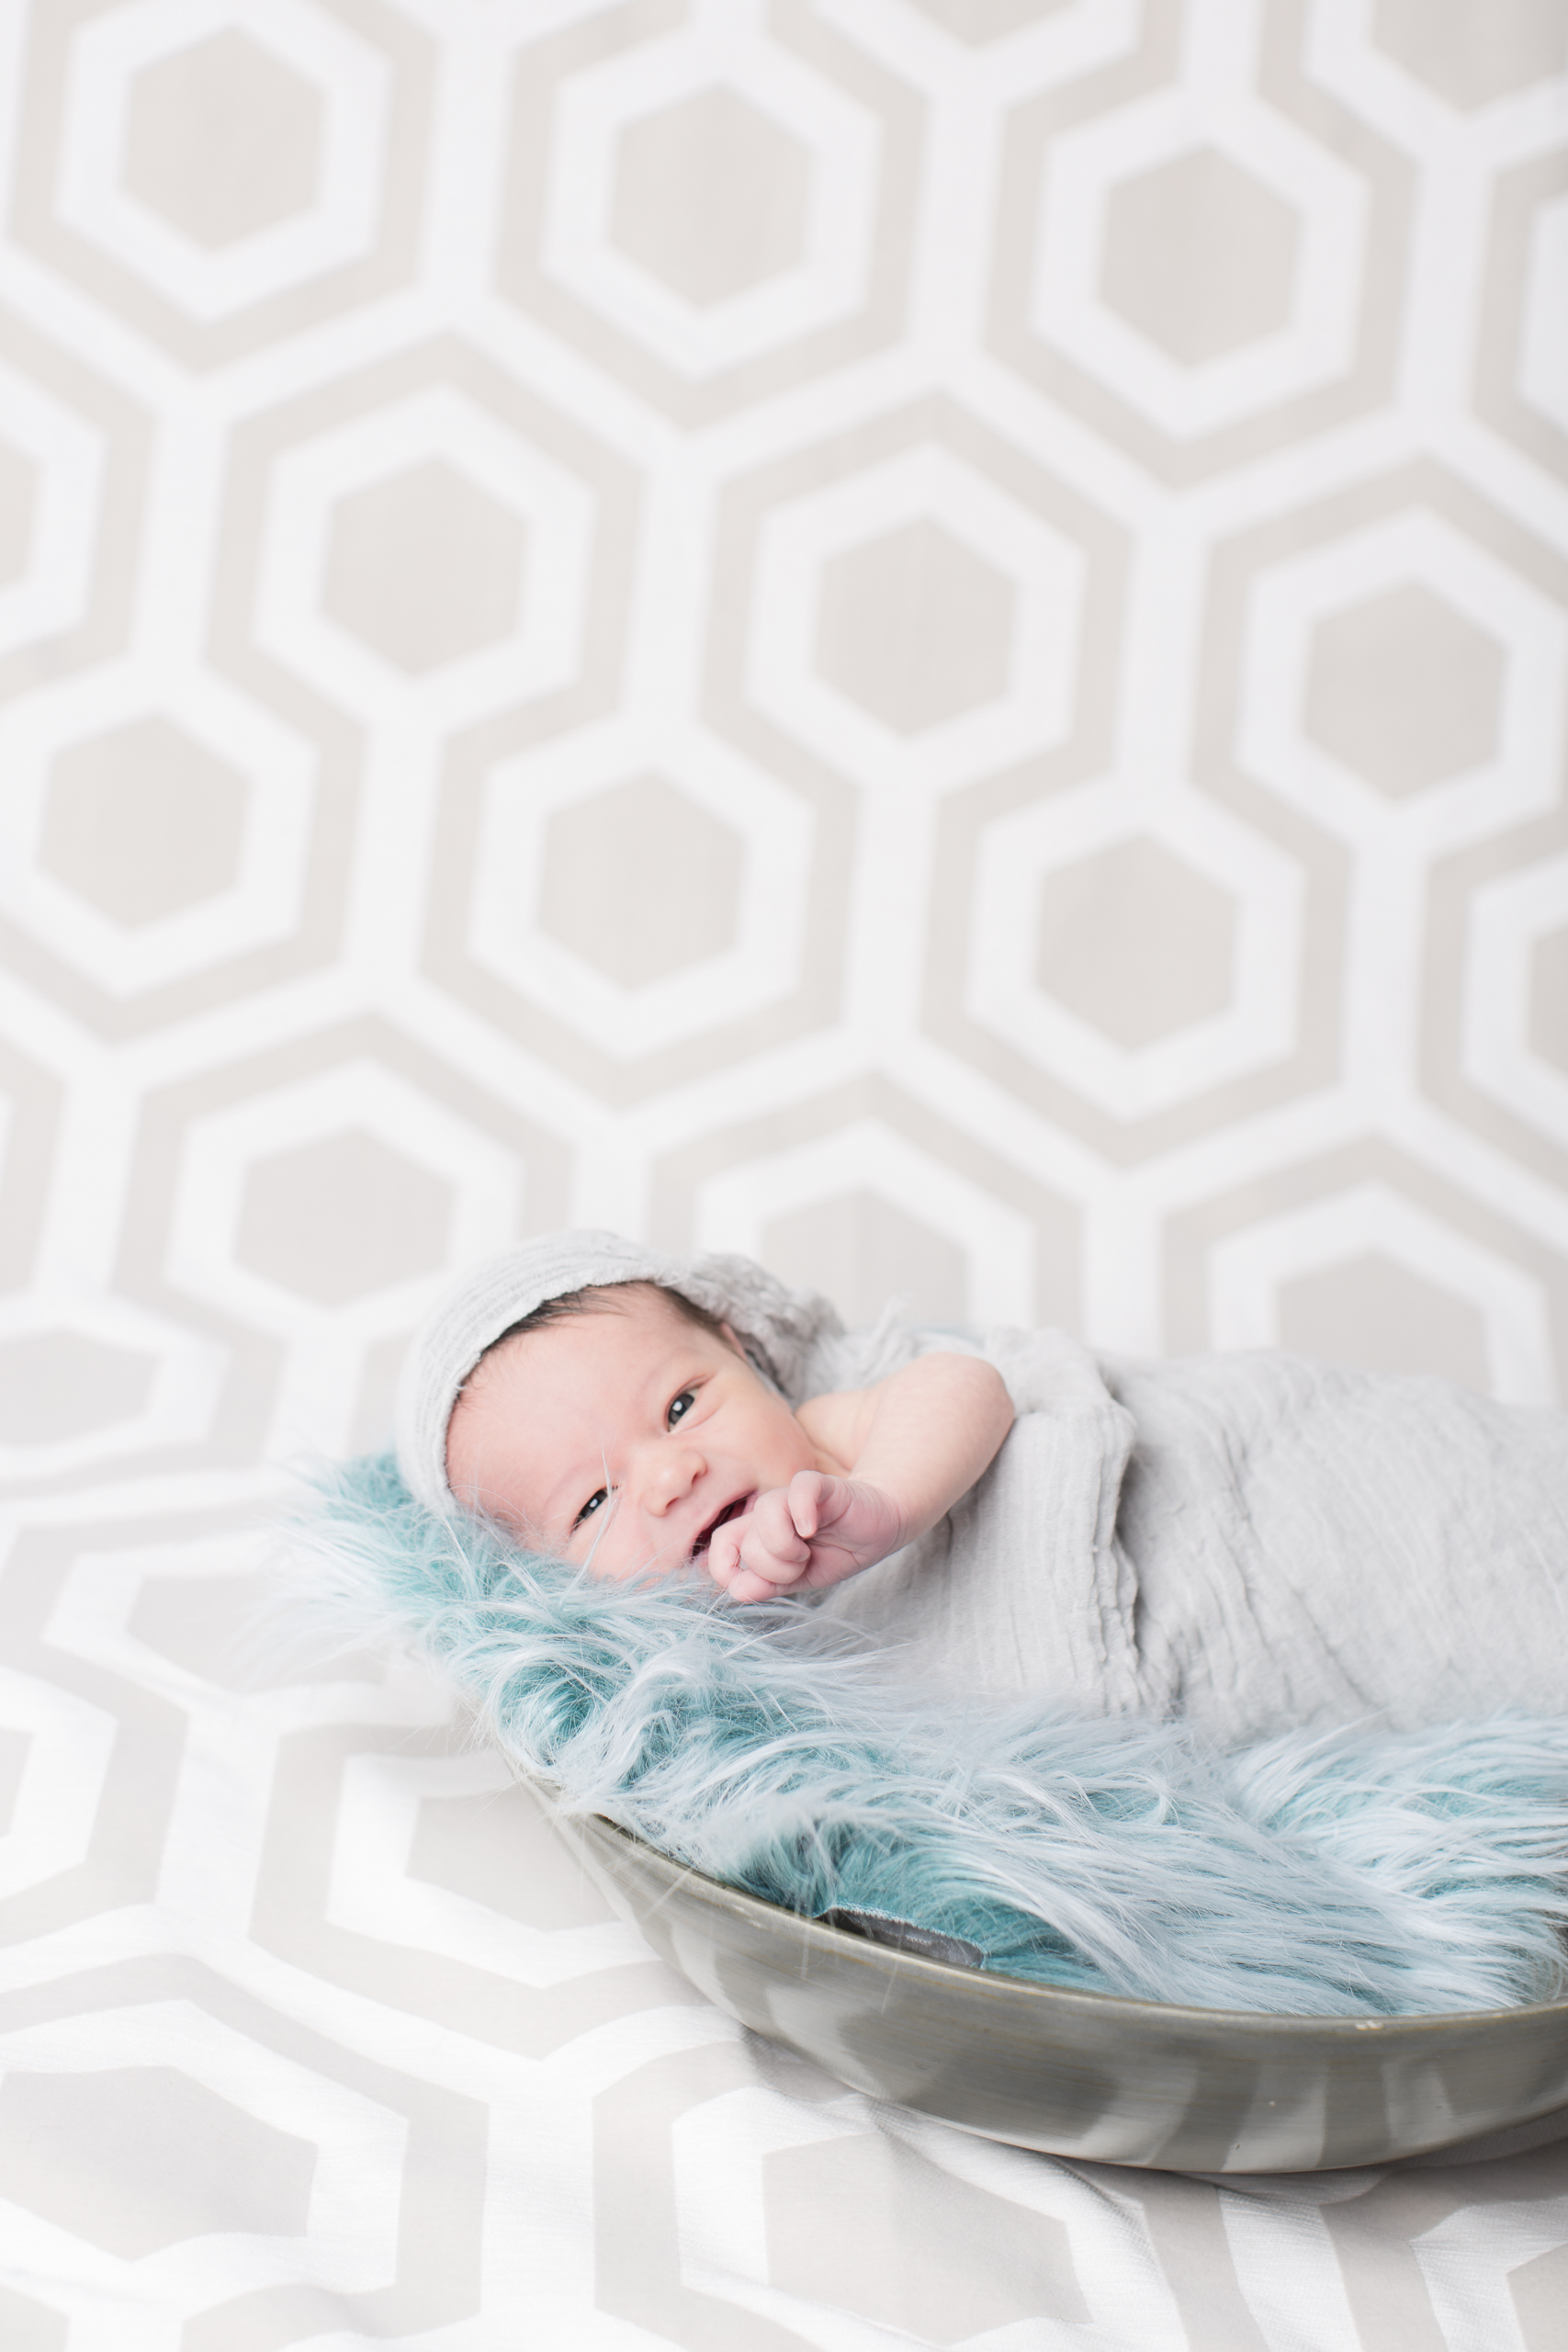 03 modern newborn baby boy blue swaddle in bowl modern hexagon backdrop studio photography session.jpg